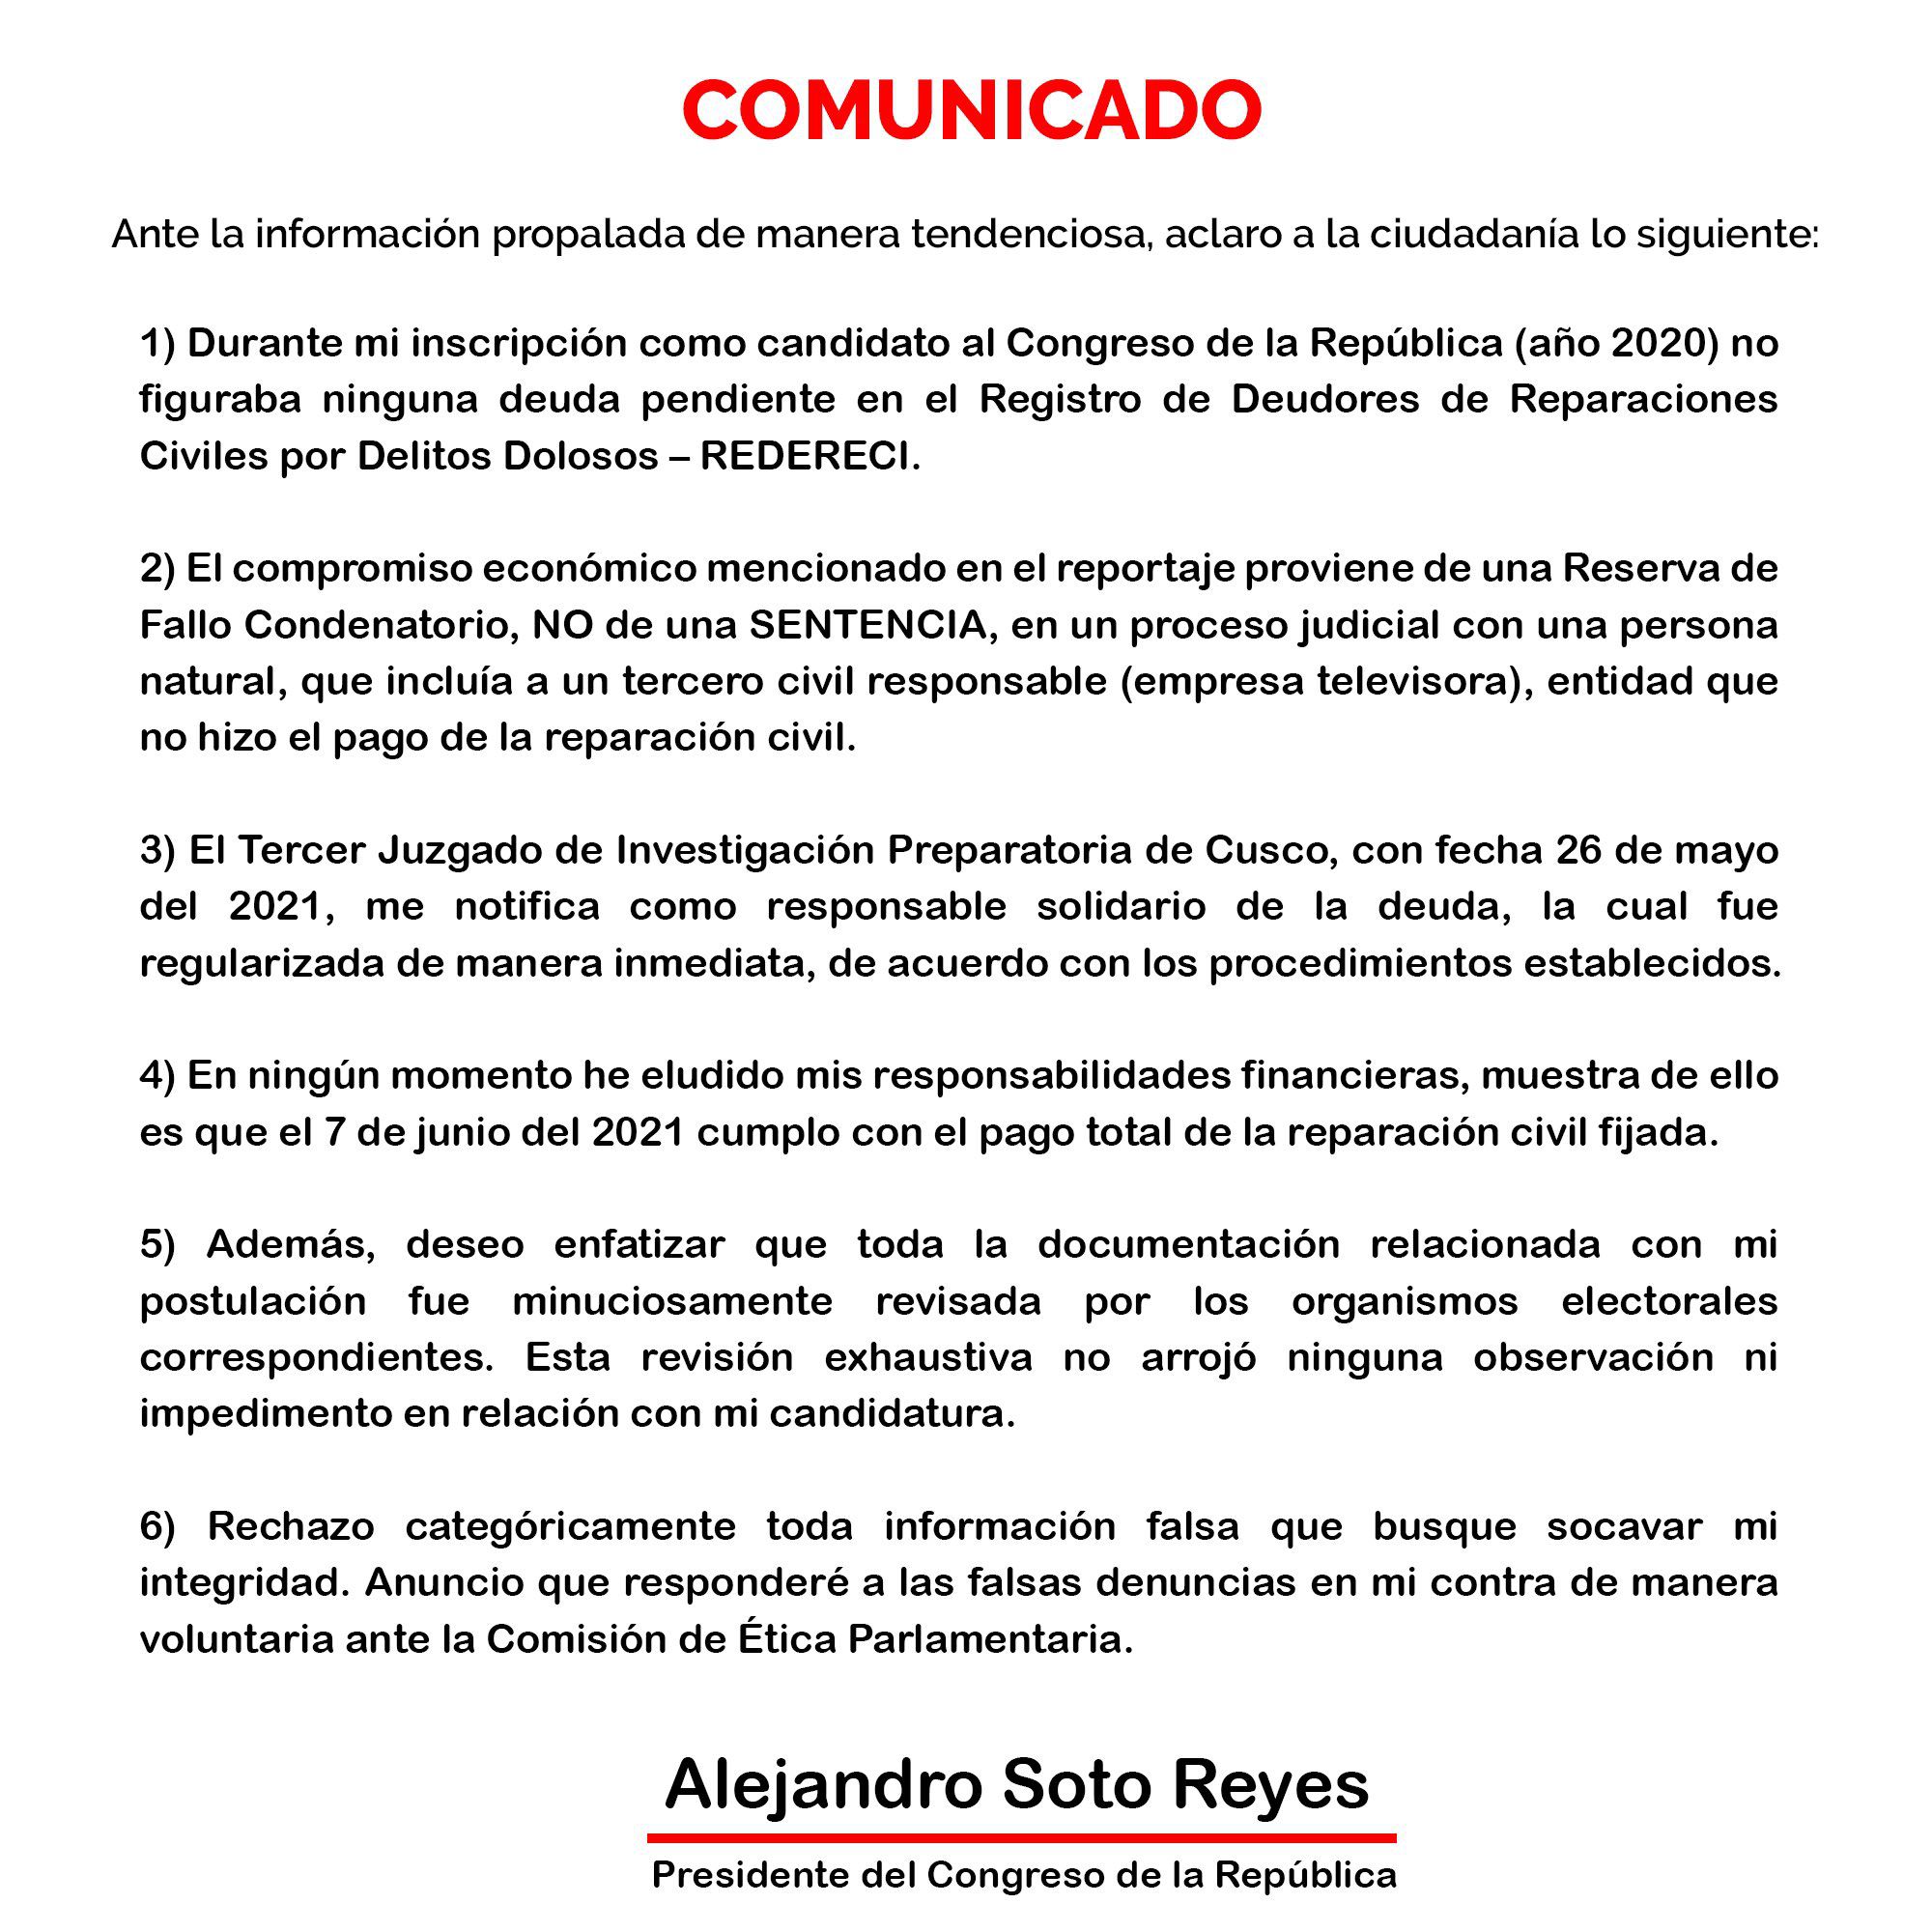 Statement from Alejandro Soto